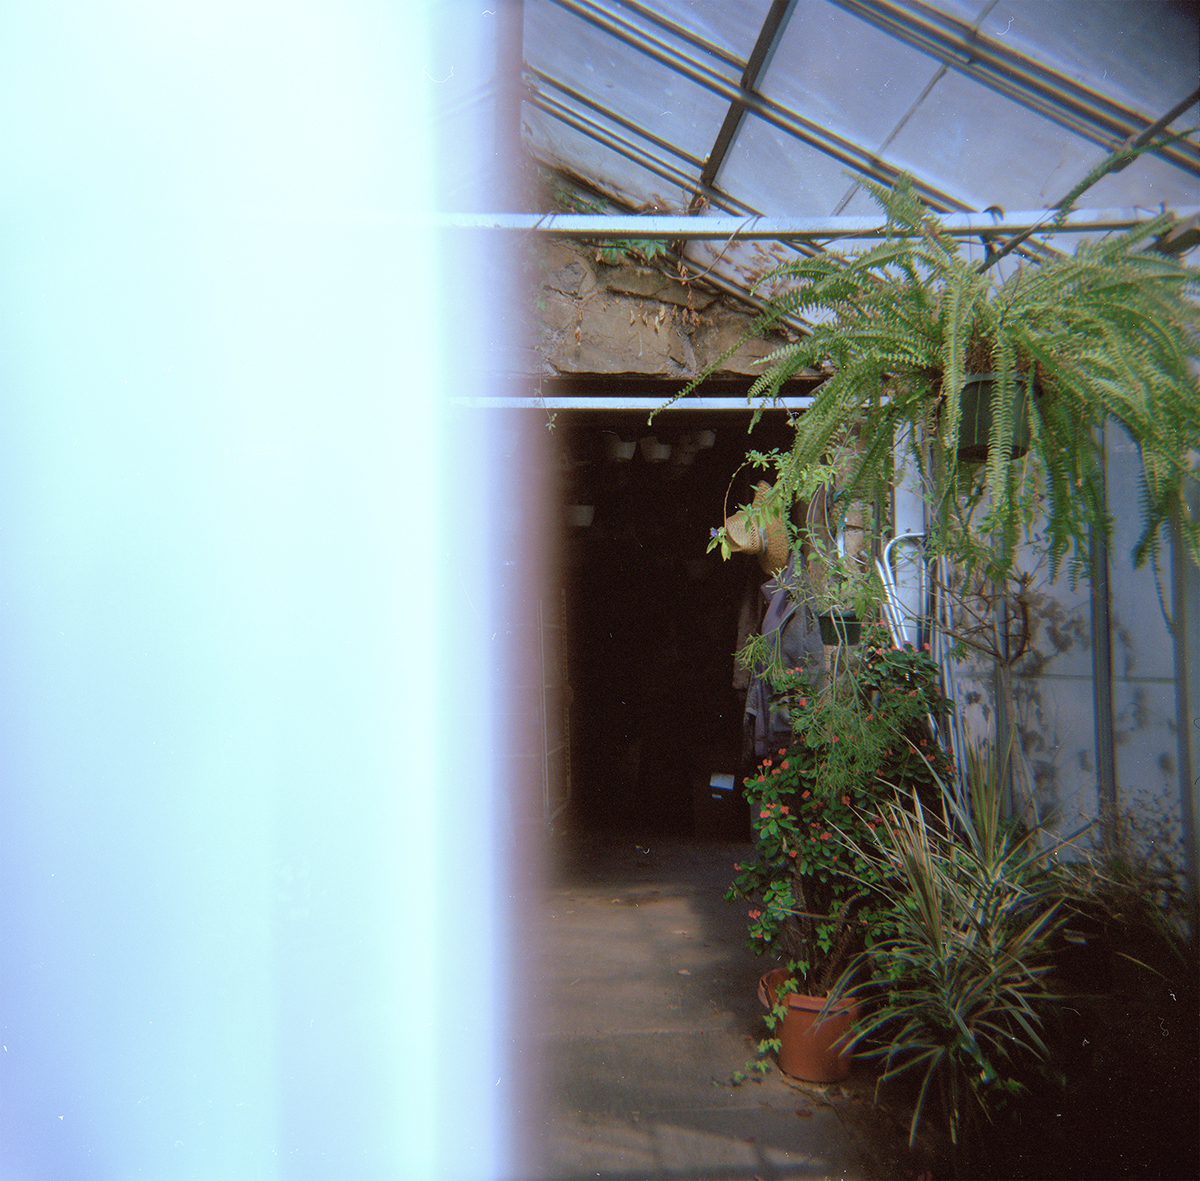 greenhouse plants bookarts handmade paper holga portra Book Binding film photography analog photography